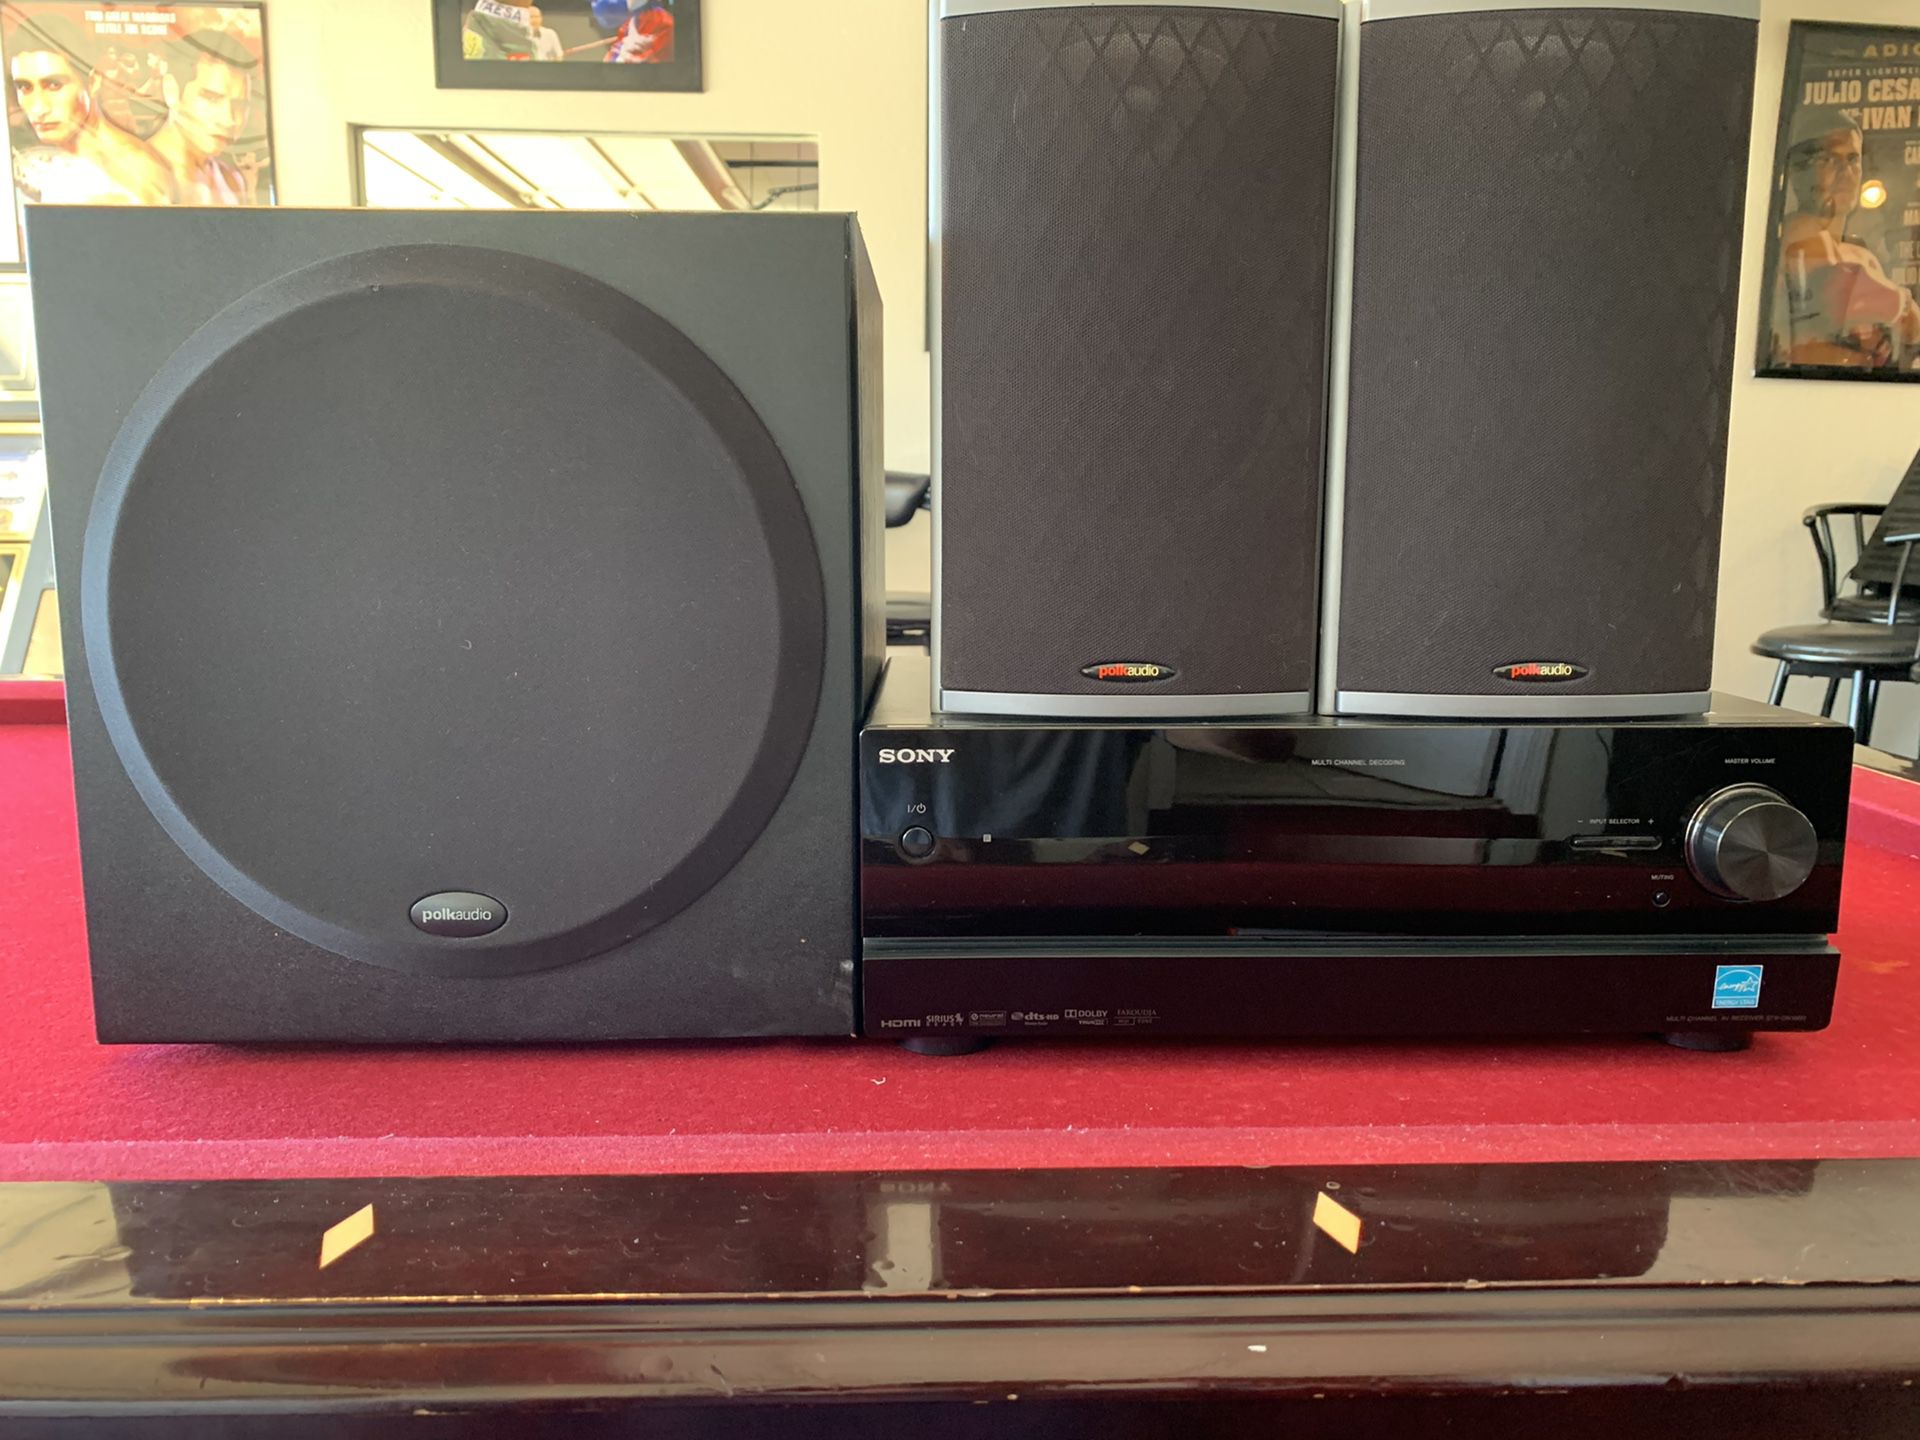 2 polk audio rt14 speakers 1 polk audio psw202 subwoofer and 1 Sony STR-DN1000